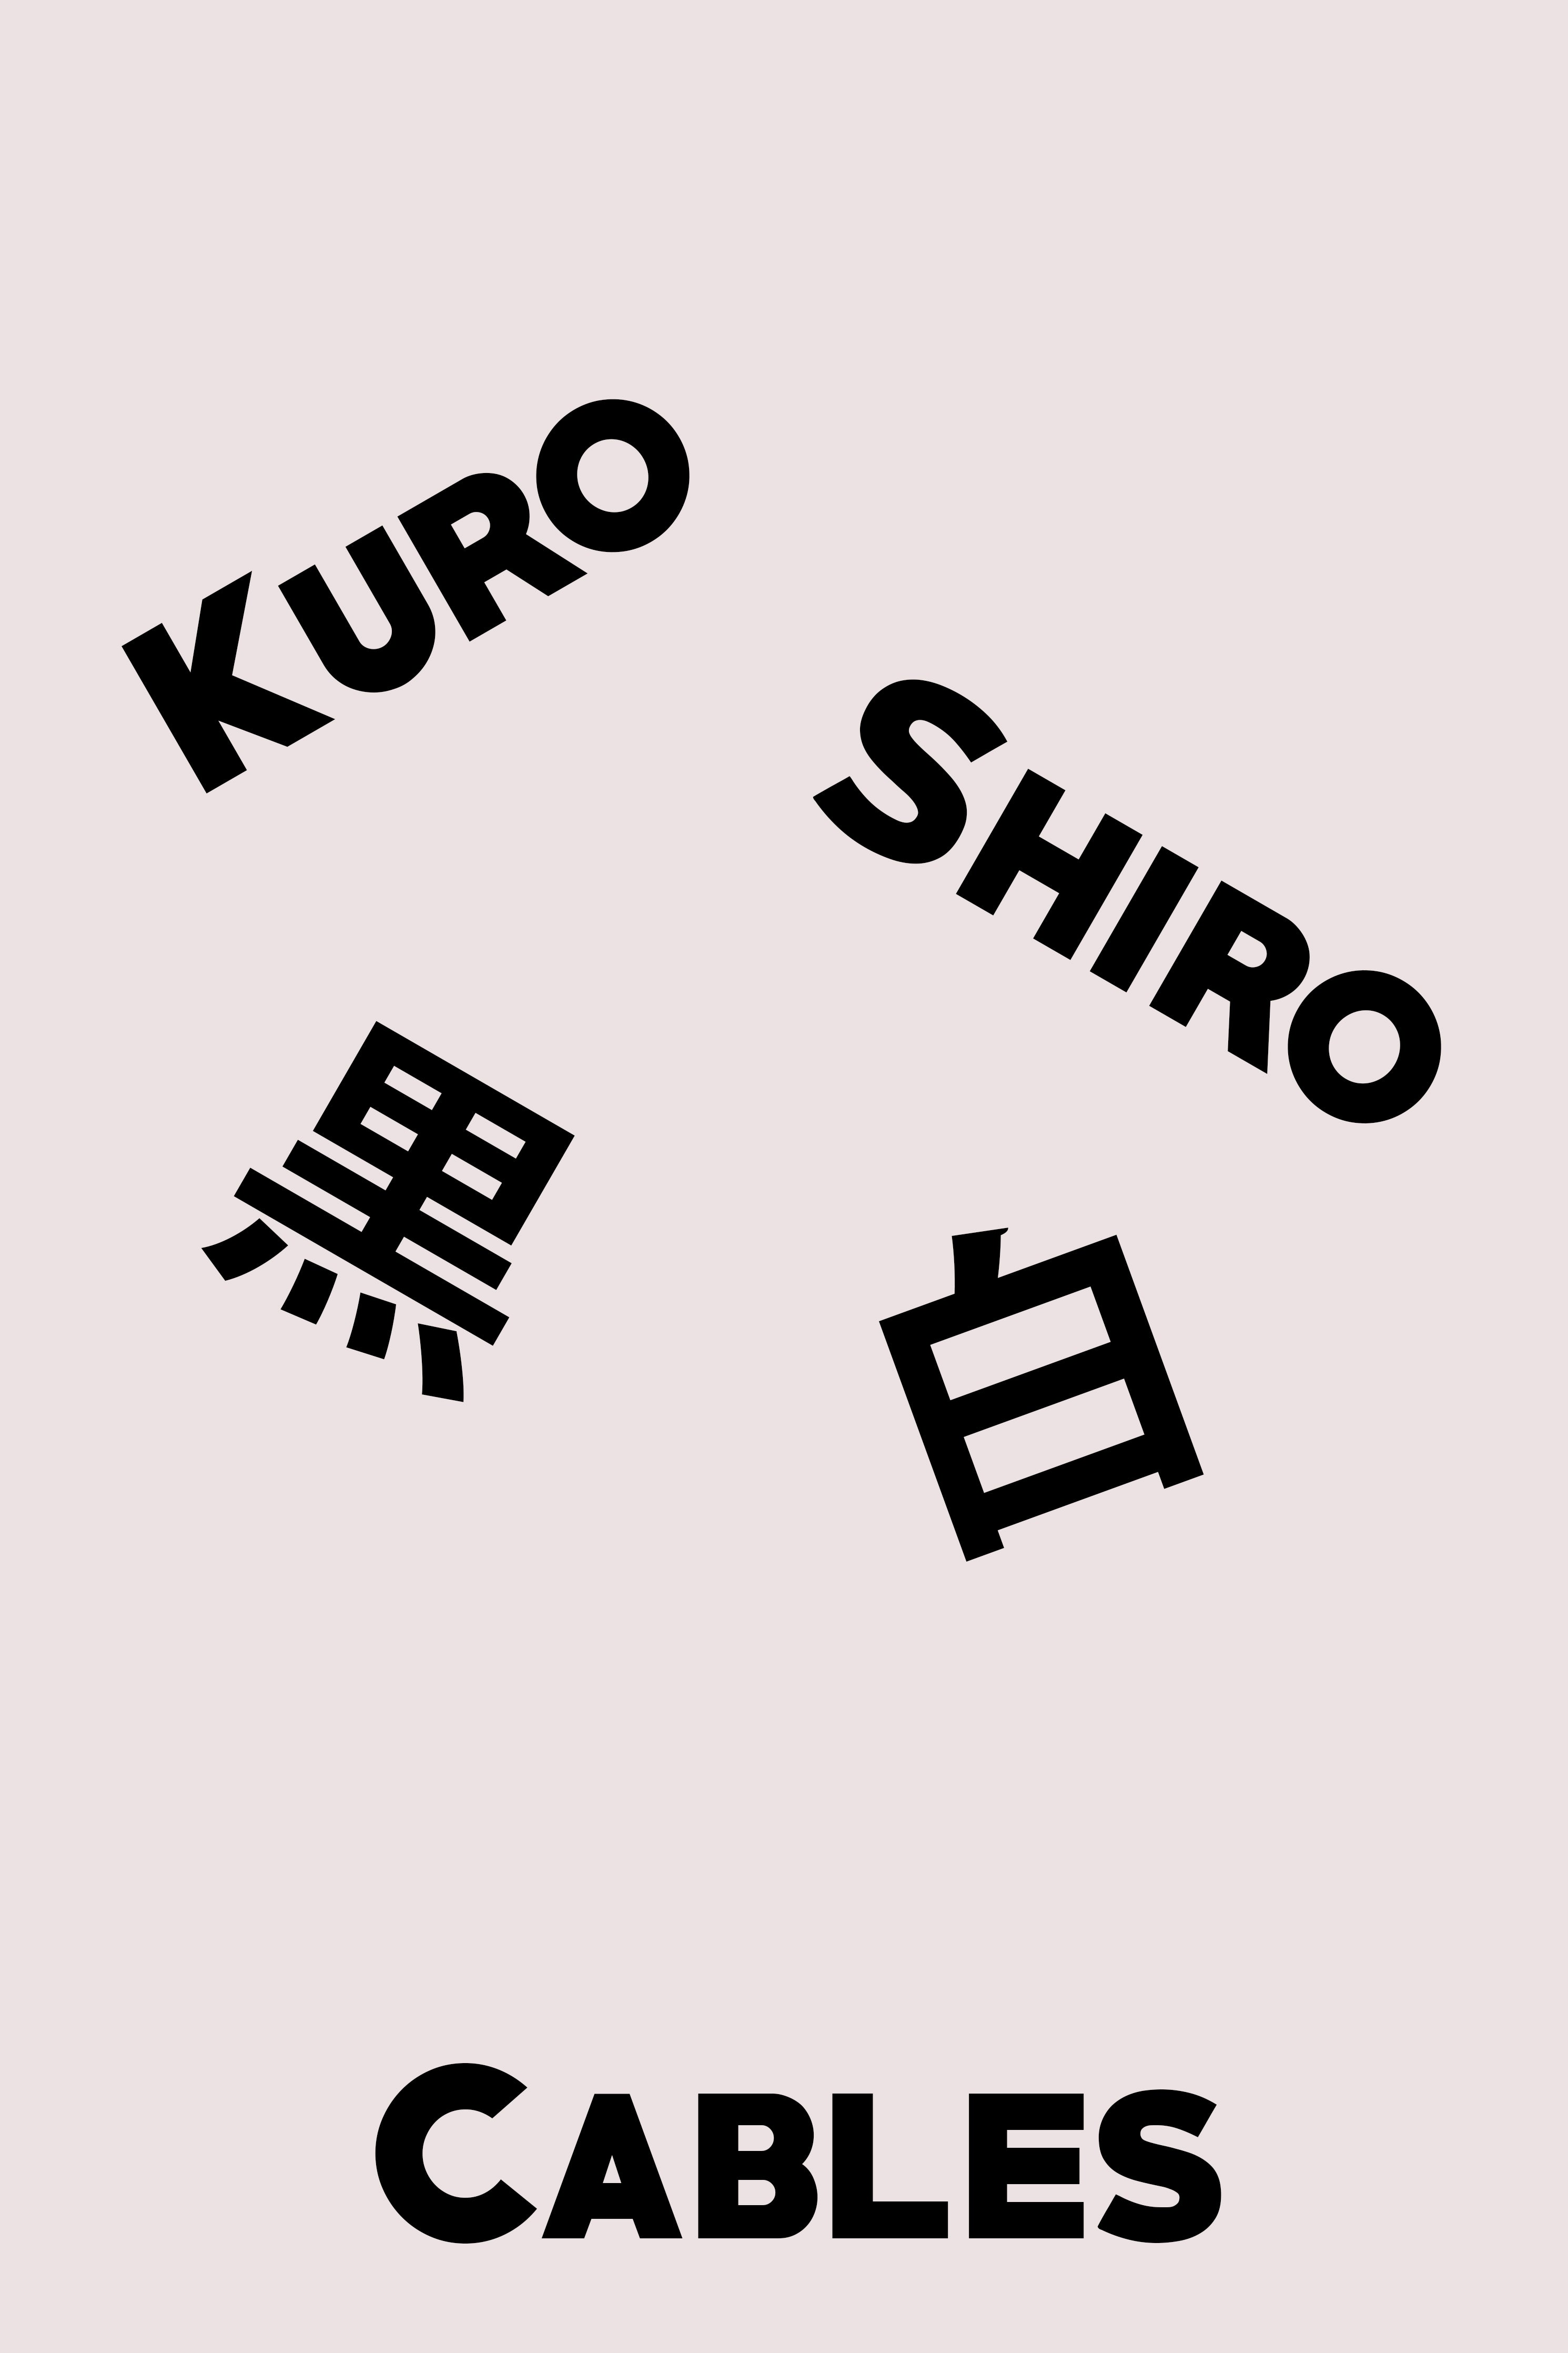 Kuro Shiro Cables